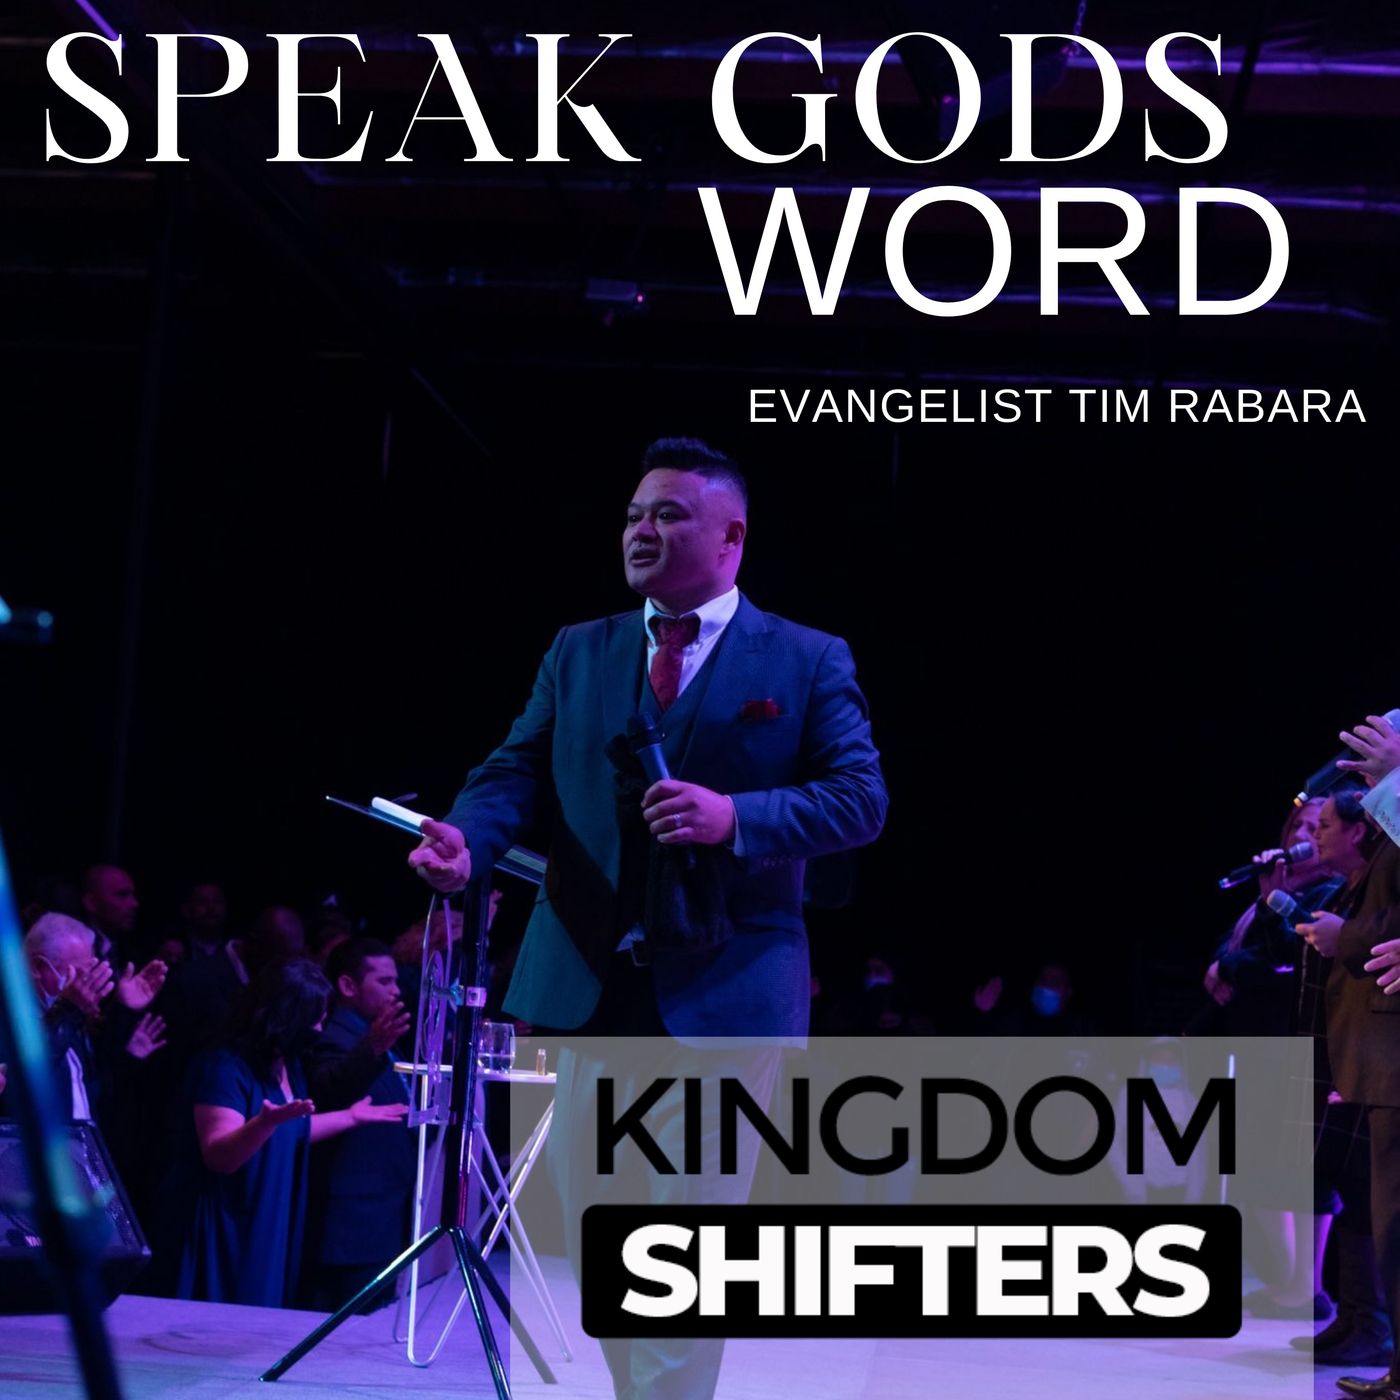 Are you speaking to your mountain? | Speak God's Word | Evangelist Tim Rabara